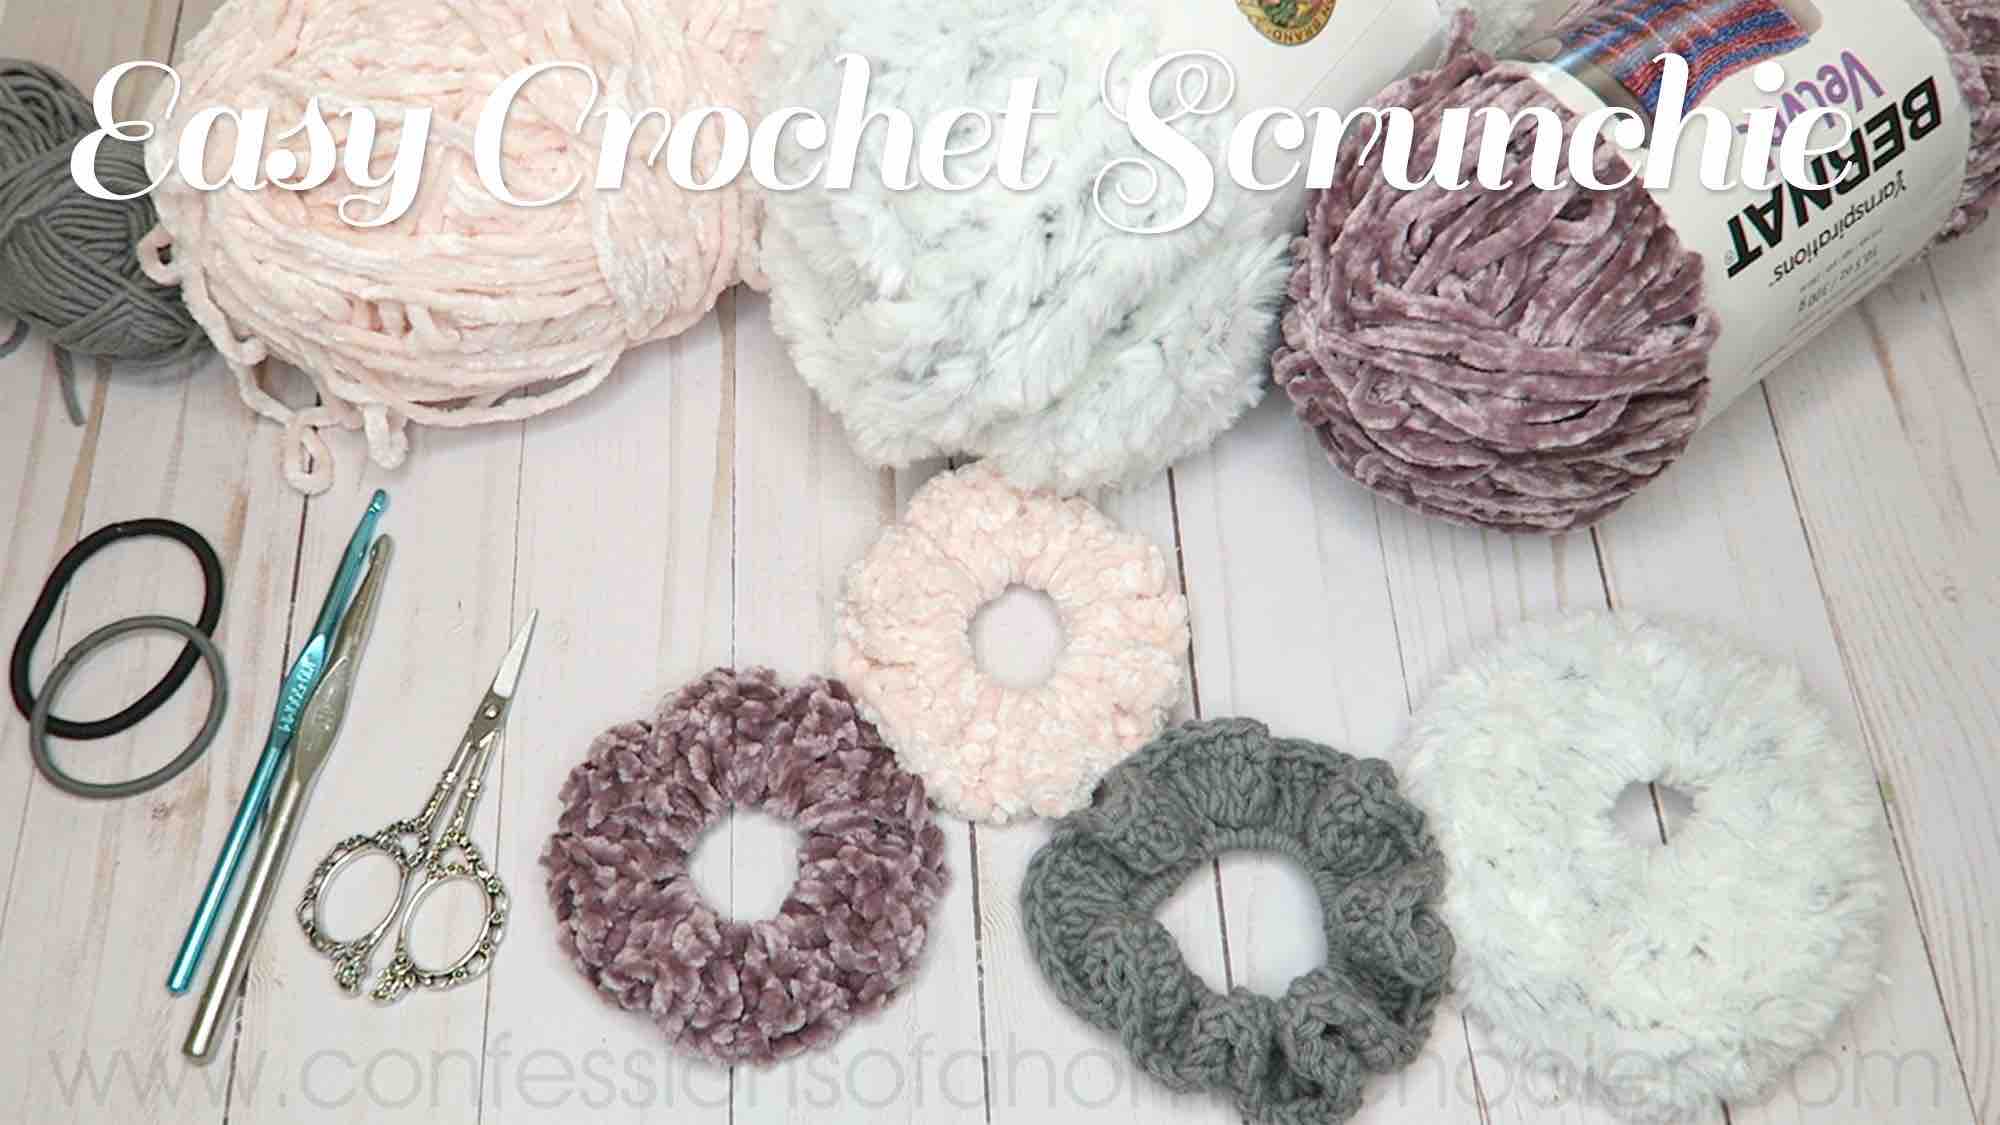 Shylercrochets - scrunchie front tie crochet top tutorial is up on